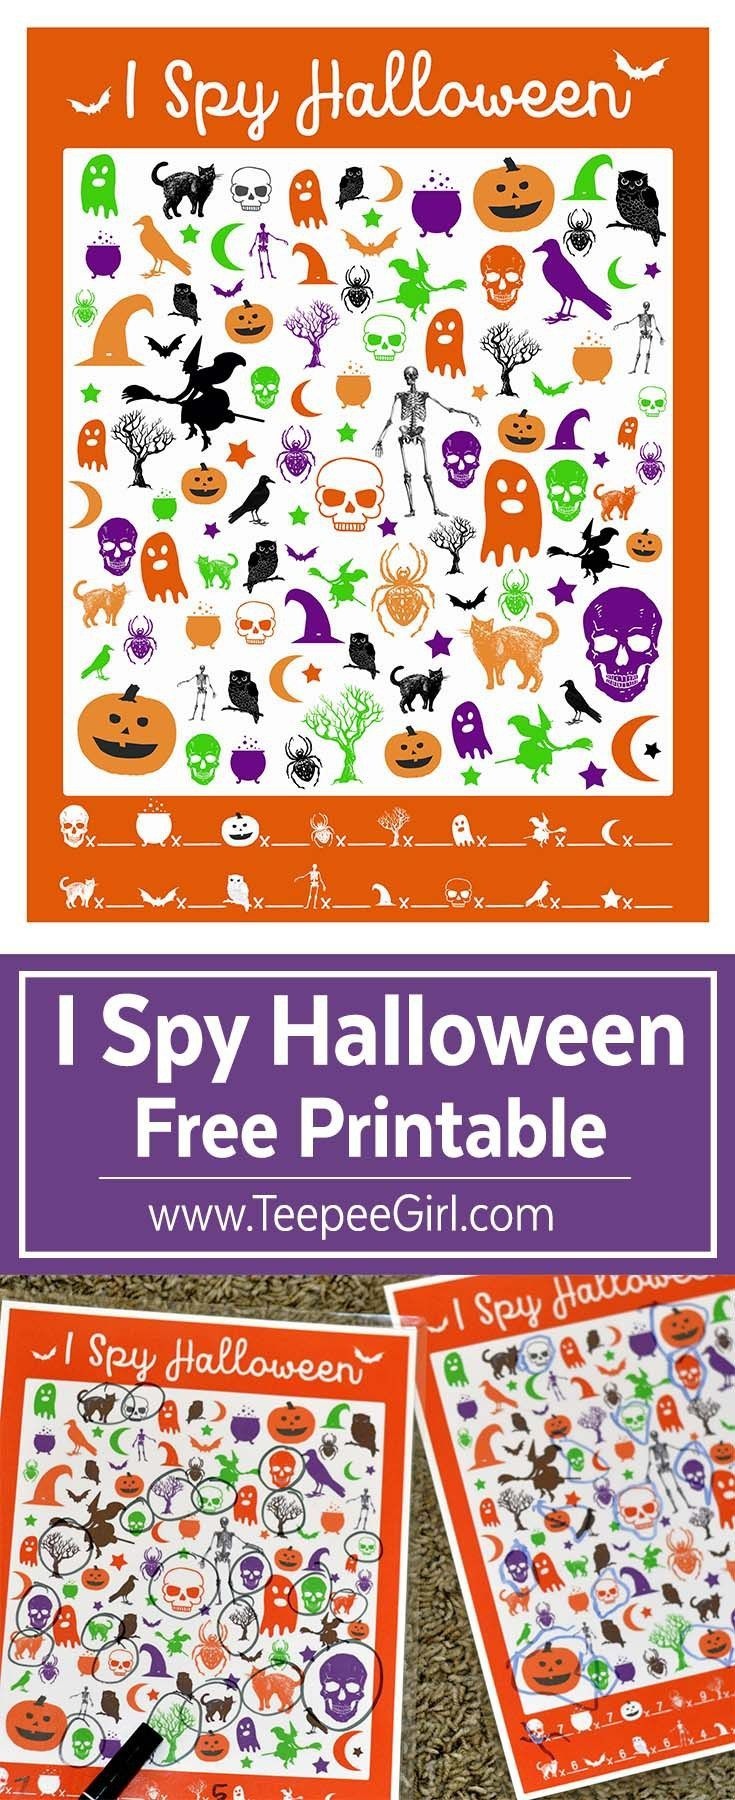 Free I Spy Halloween Game | Free Printables | Halloween Party - Free Printable Halloween Party Games